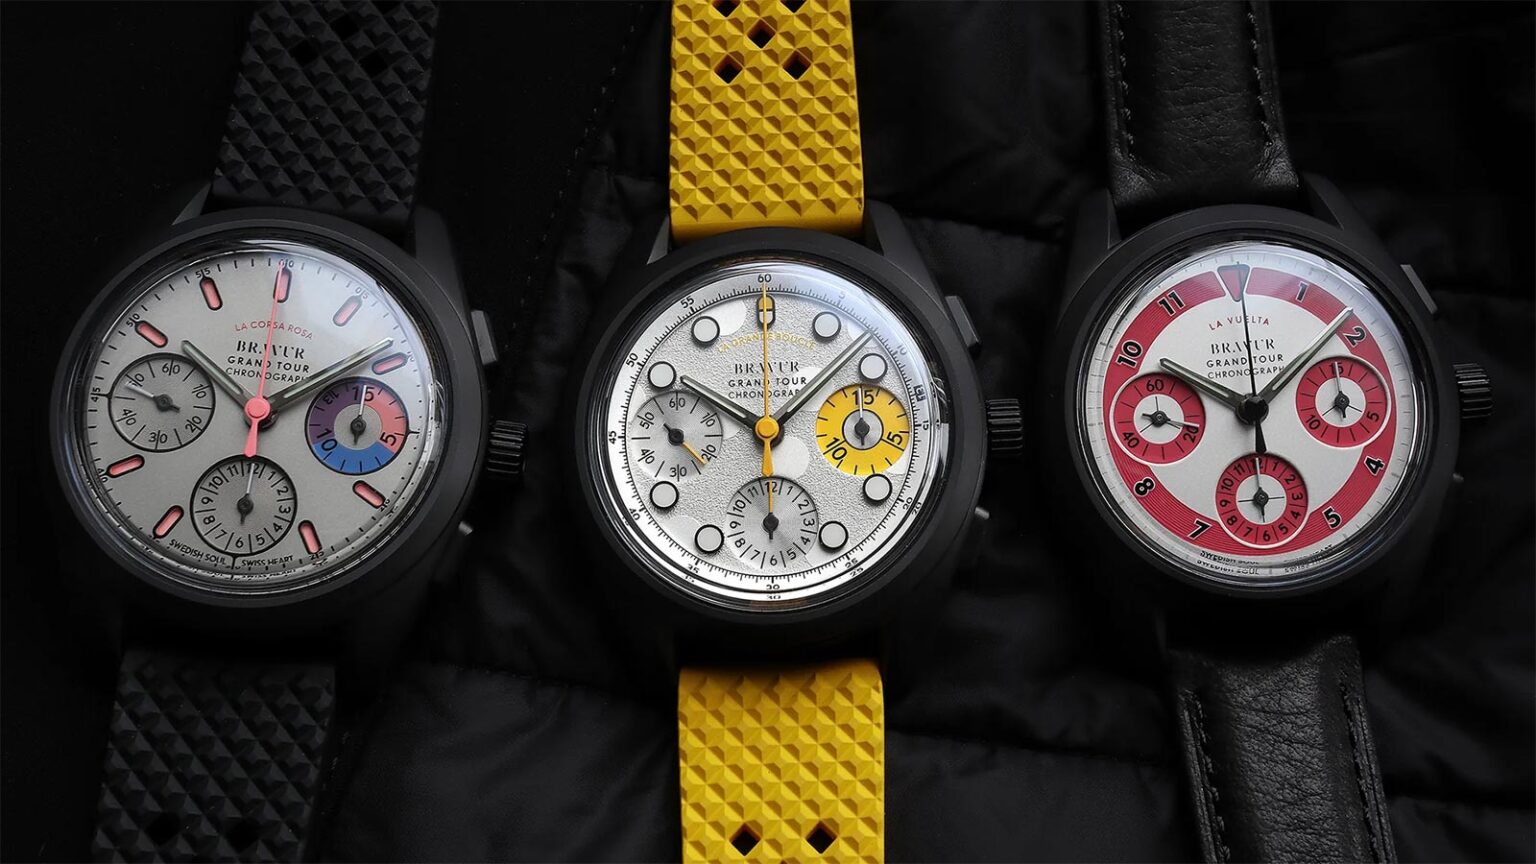 Bravur Grand Tour collection of luxury handmade mechanical watches celebrates Giro d'Italia, Tour de France, and Vuelta a España